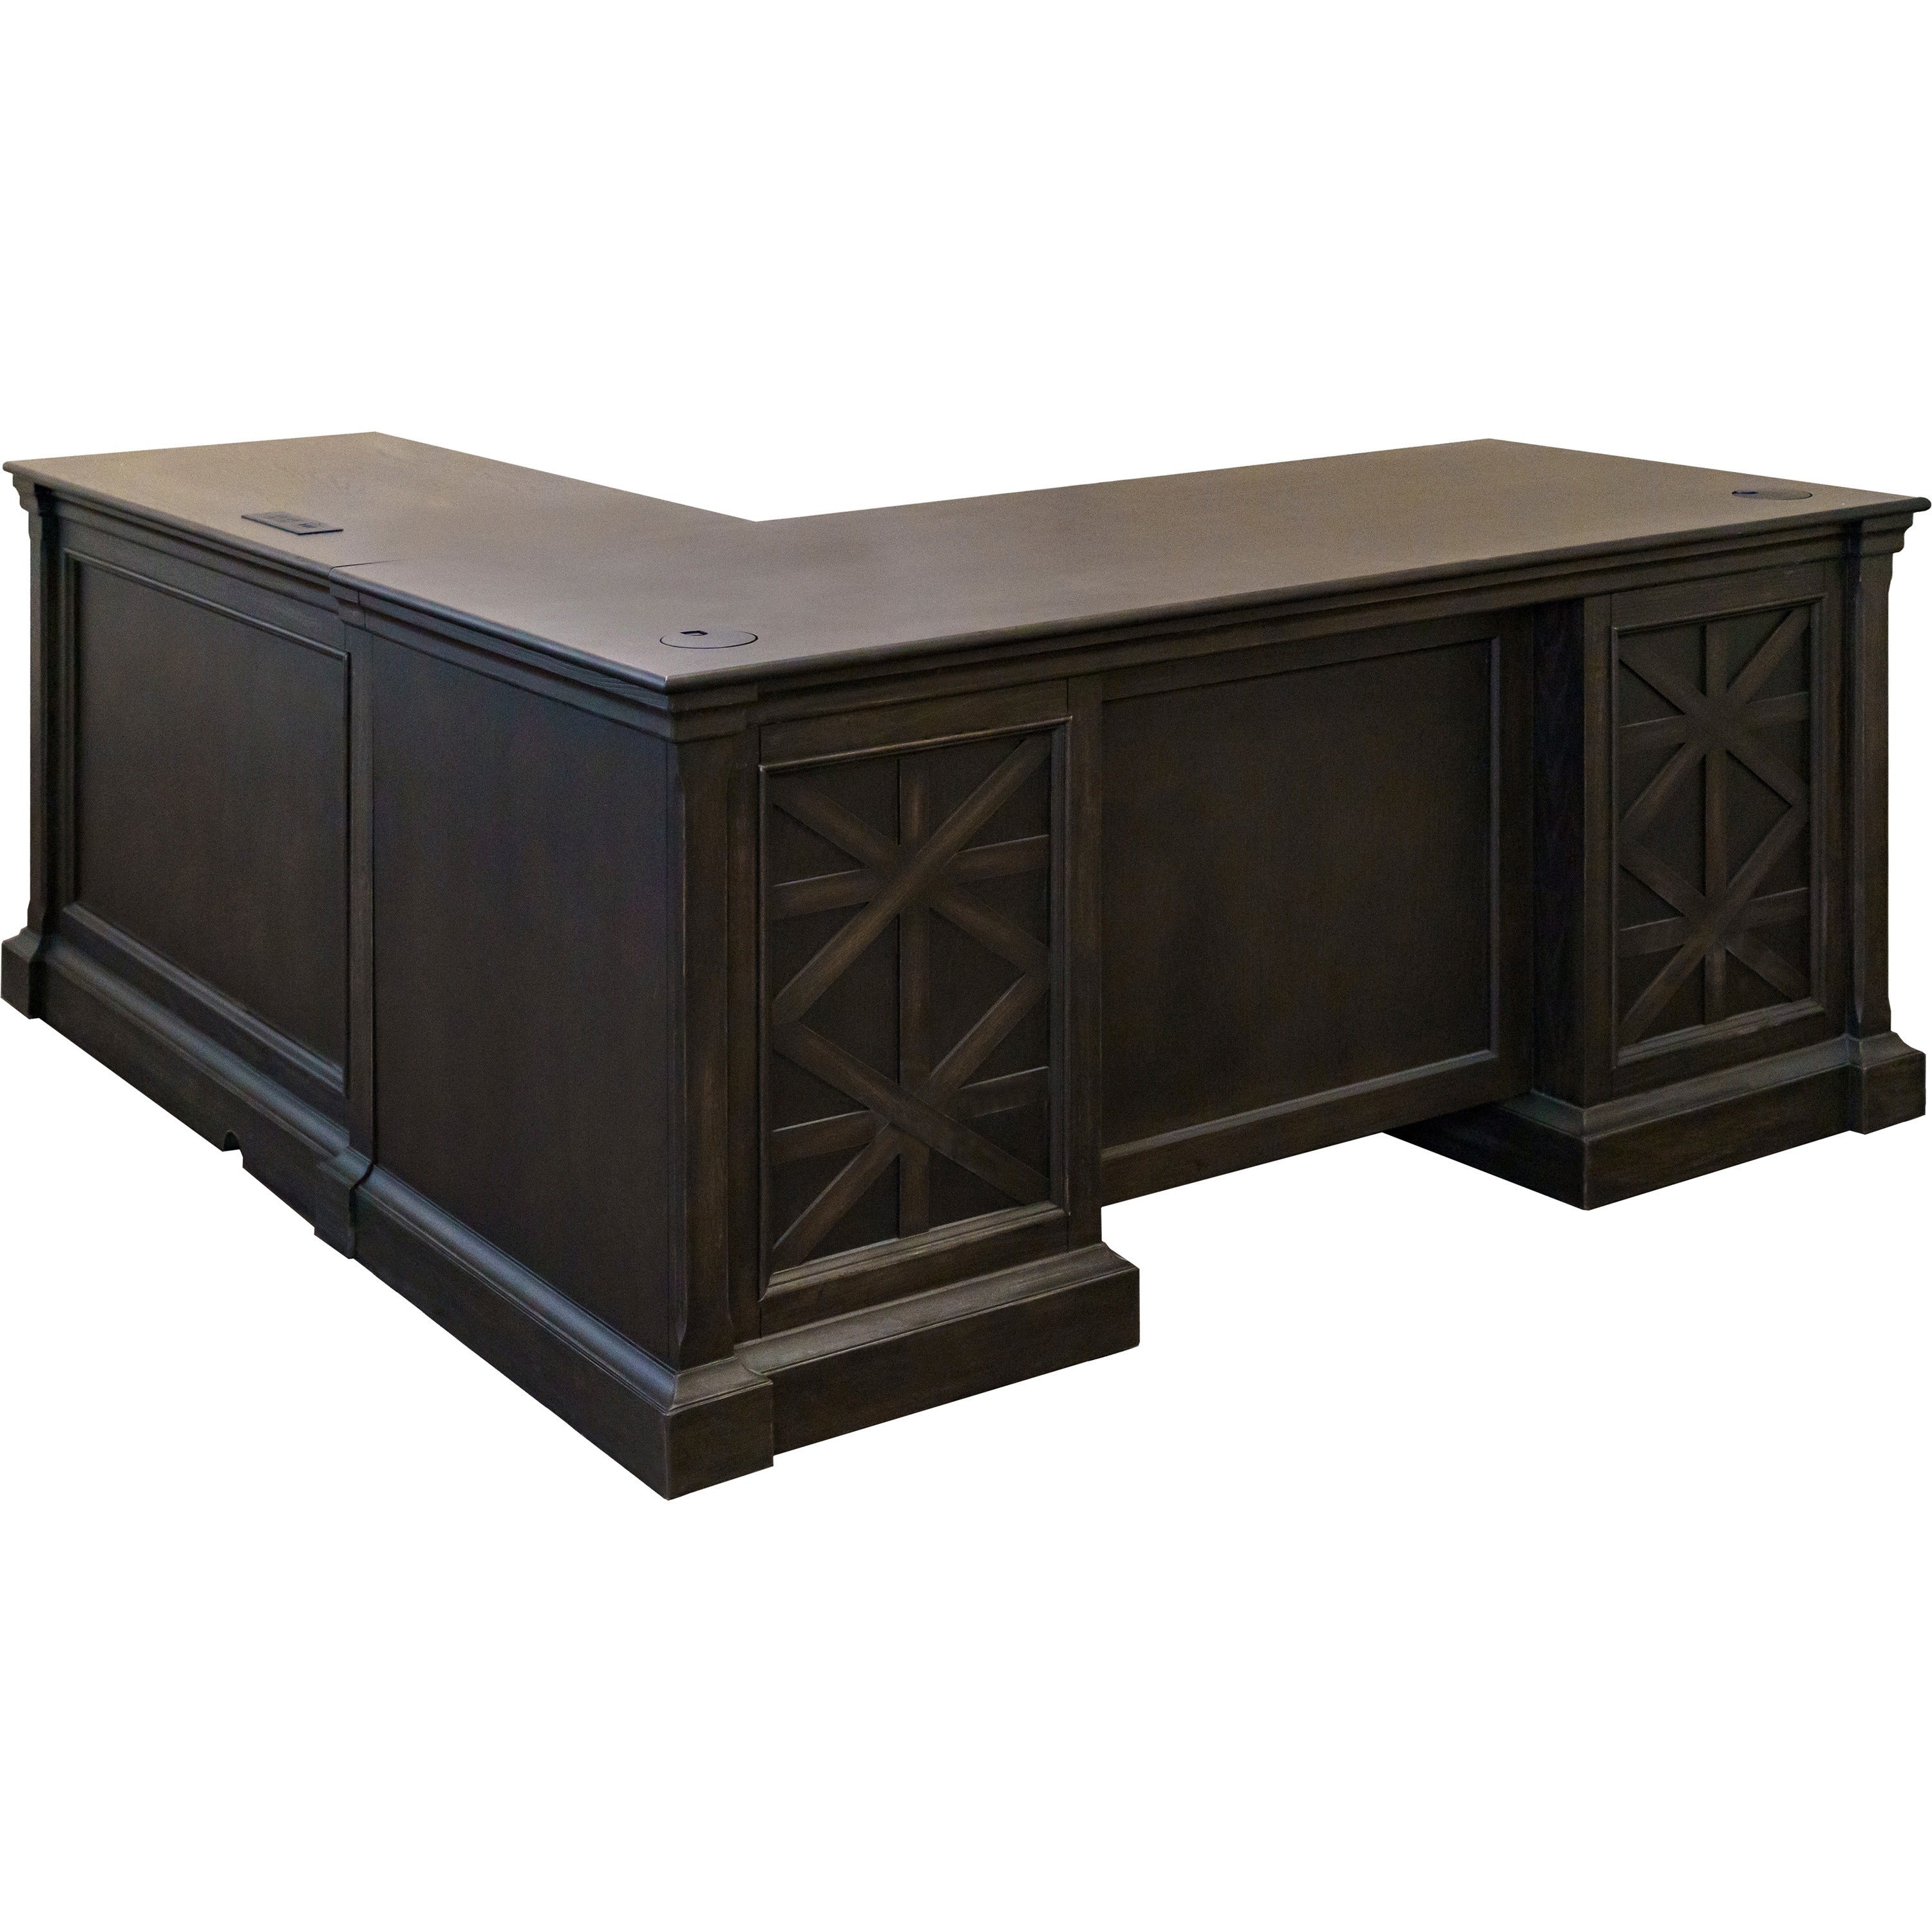 martin-kingston-desk-with-pedestal-box-1-of-2-66-x-3030-4-x-utility-file-drawers-material-wood-finish-dark-chocolate-rub-through_mrtimkn684r - 3